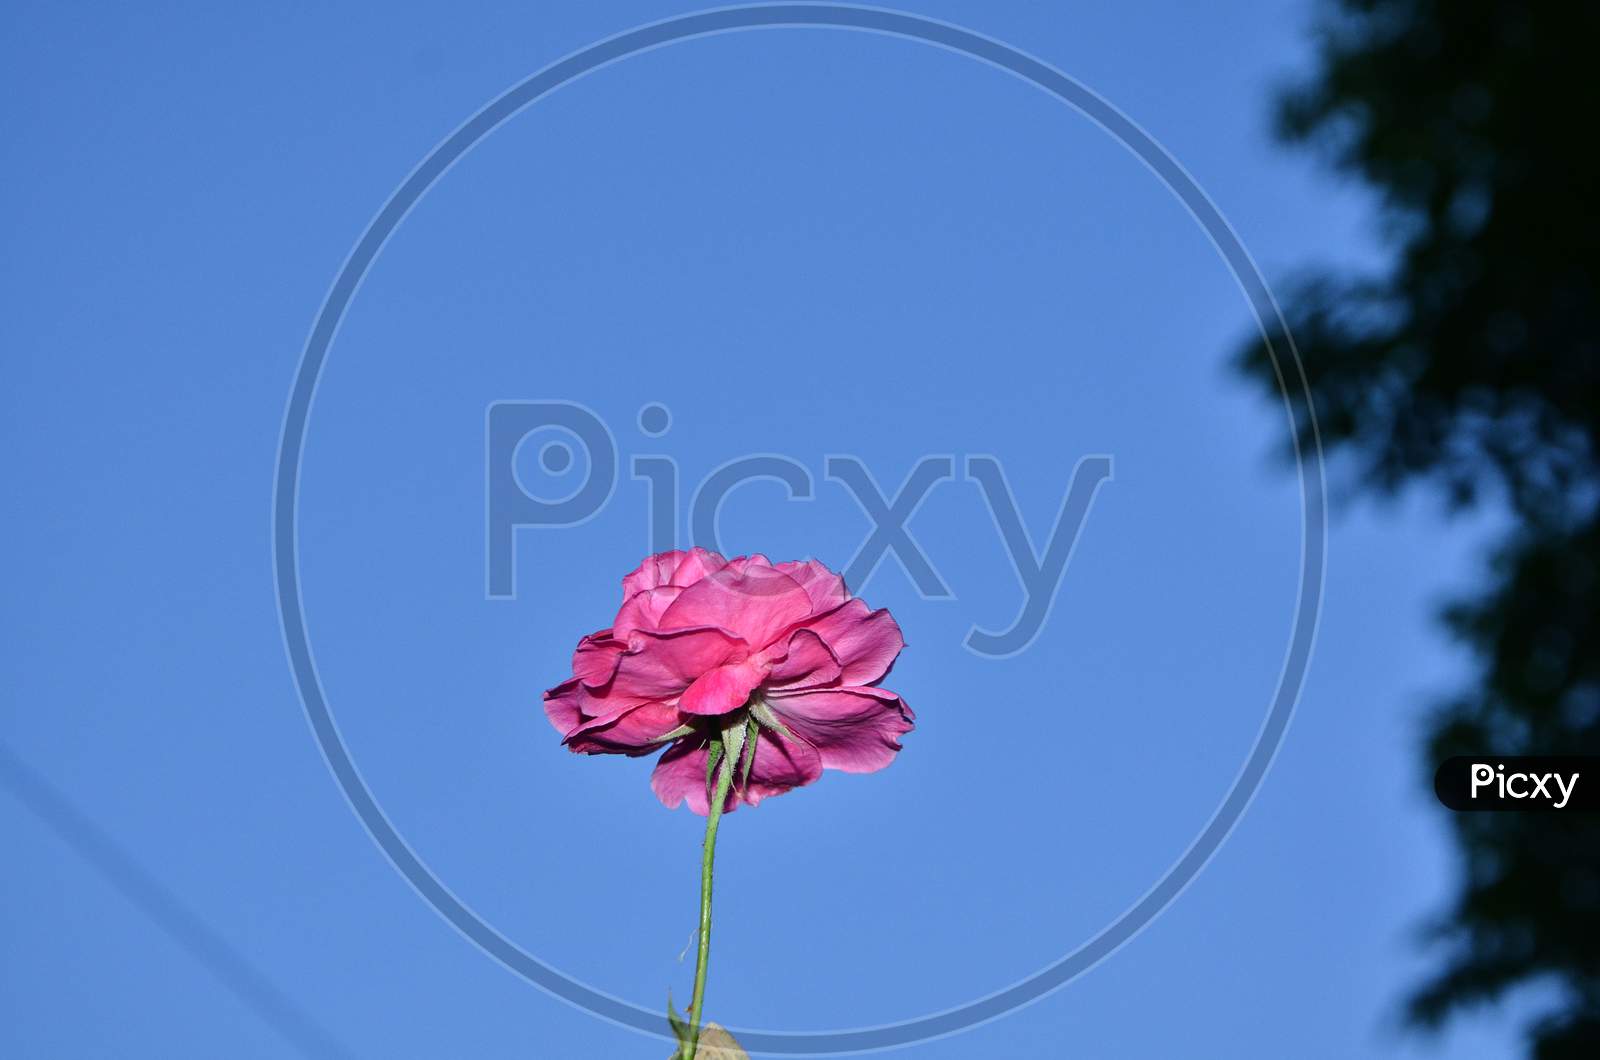 Rose Flower in Blue Sky India